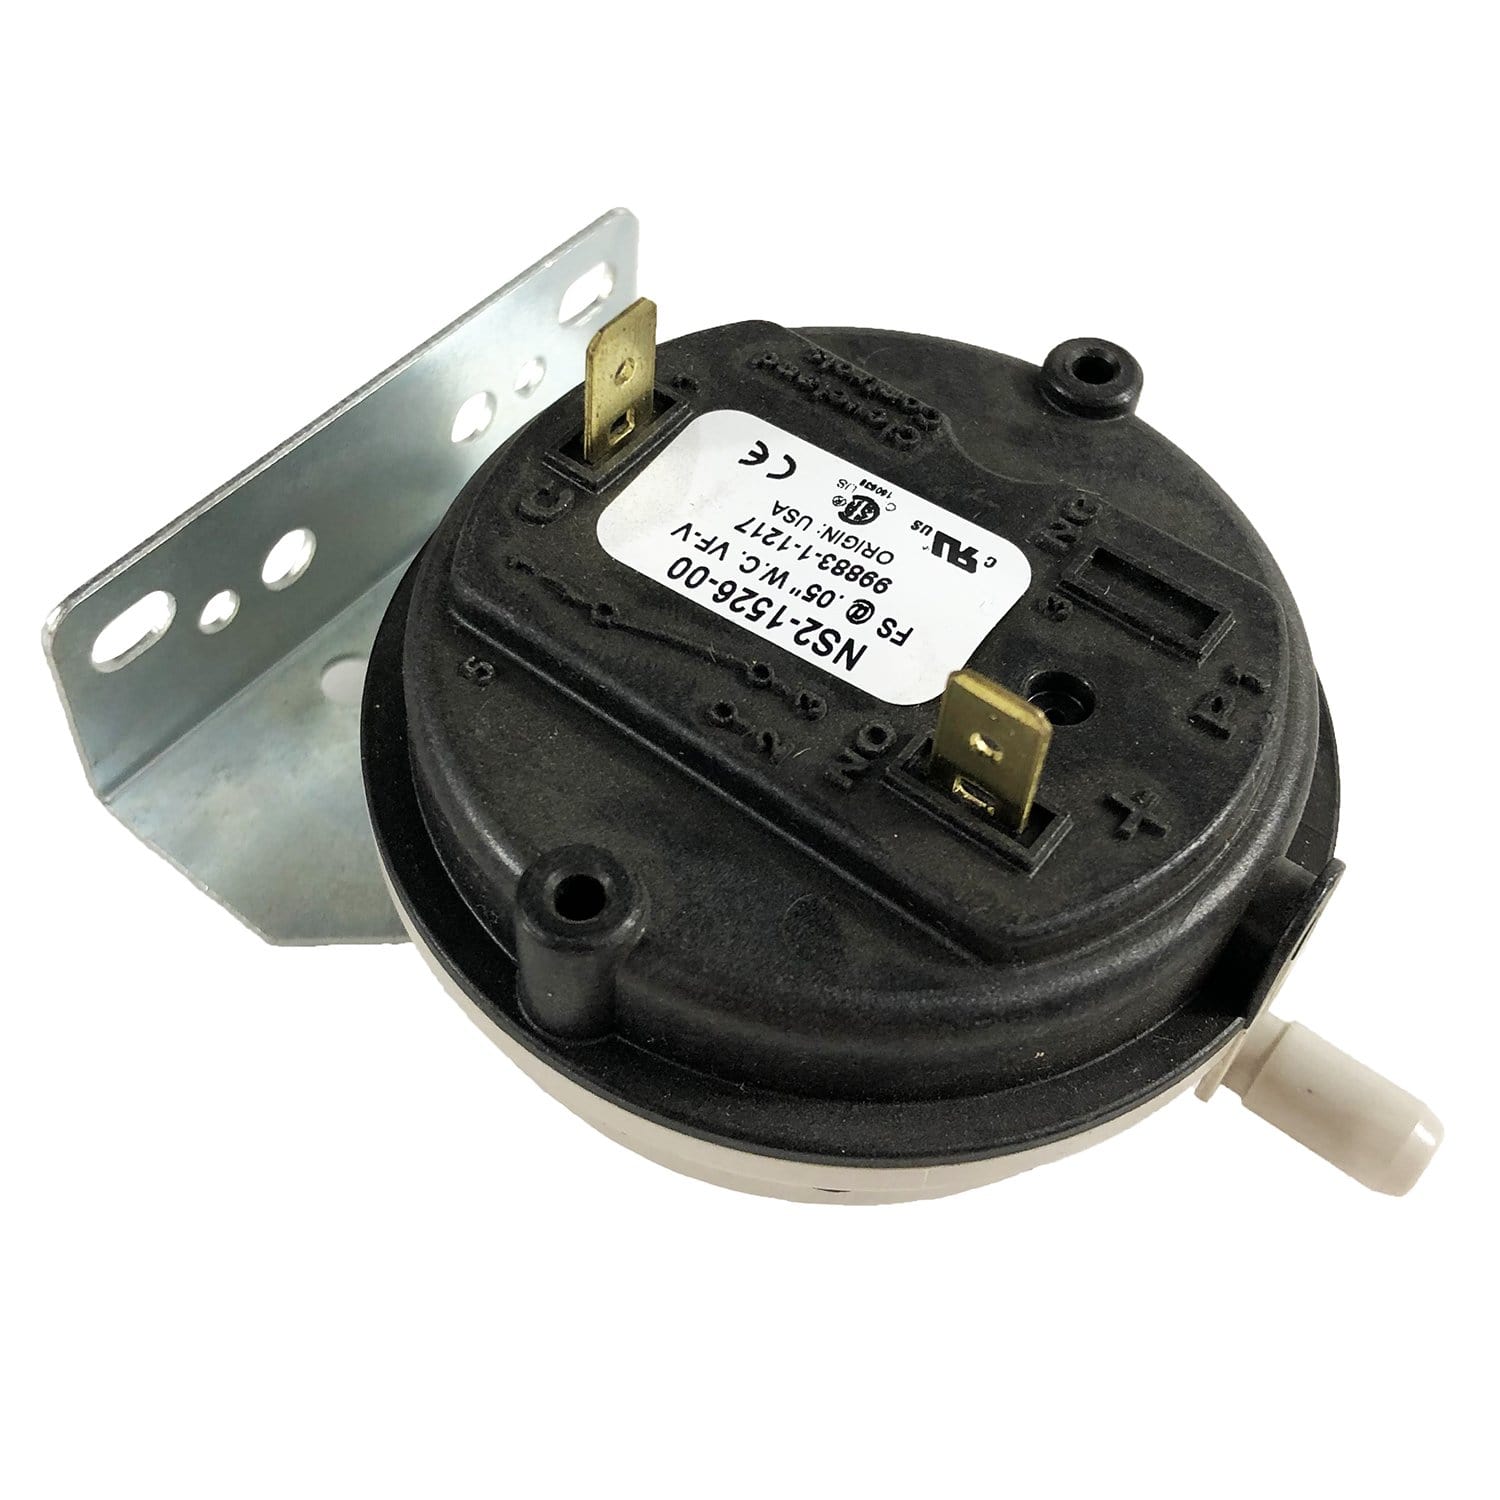 NBK-20165 Vacuum Switch 115v, Replaces Oem ENVIRO EF-017